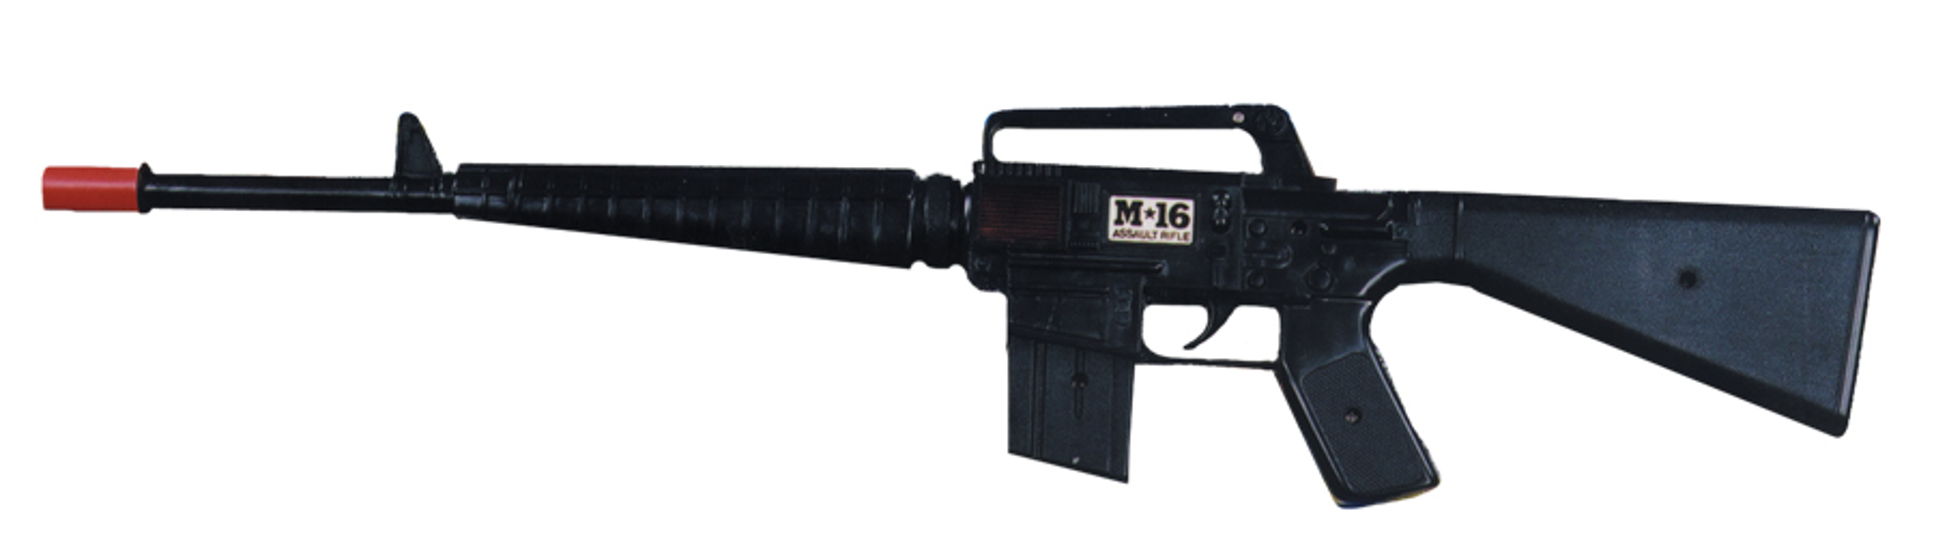 M16 SUBMACHINE GUN